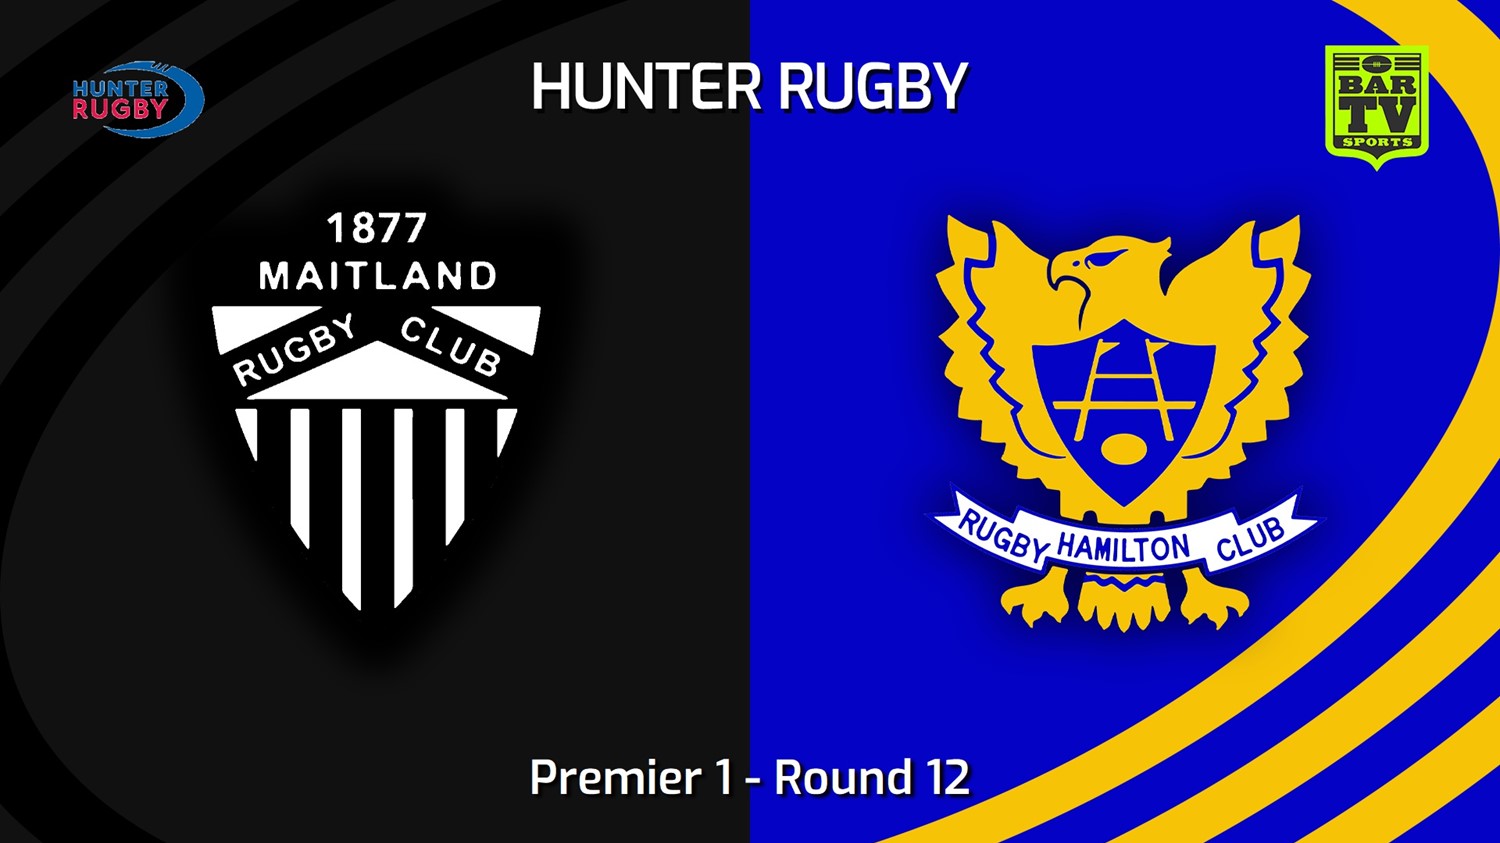 230708-Hunter Rugby Round 12 - Premier 1 - Maitland v Hamilton Hawks Minigame Slate Image